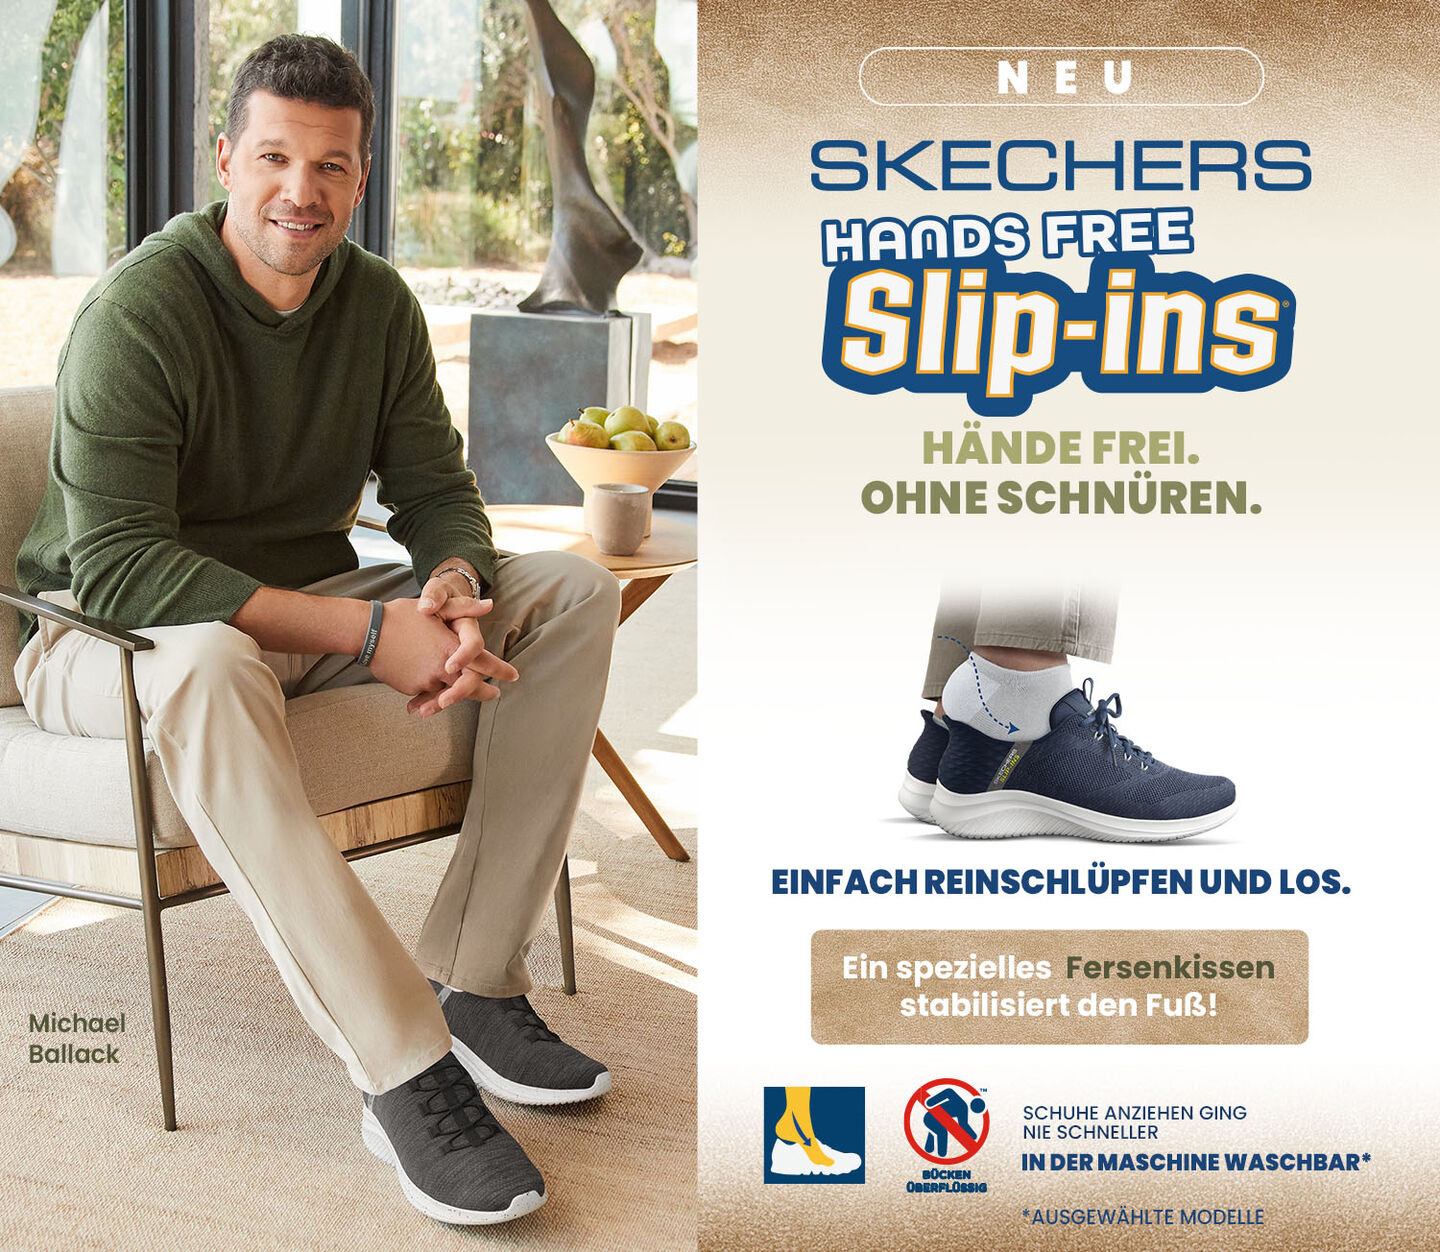 Skechers Hands Free Slip-ins x Michael Ballack